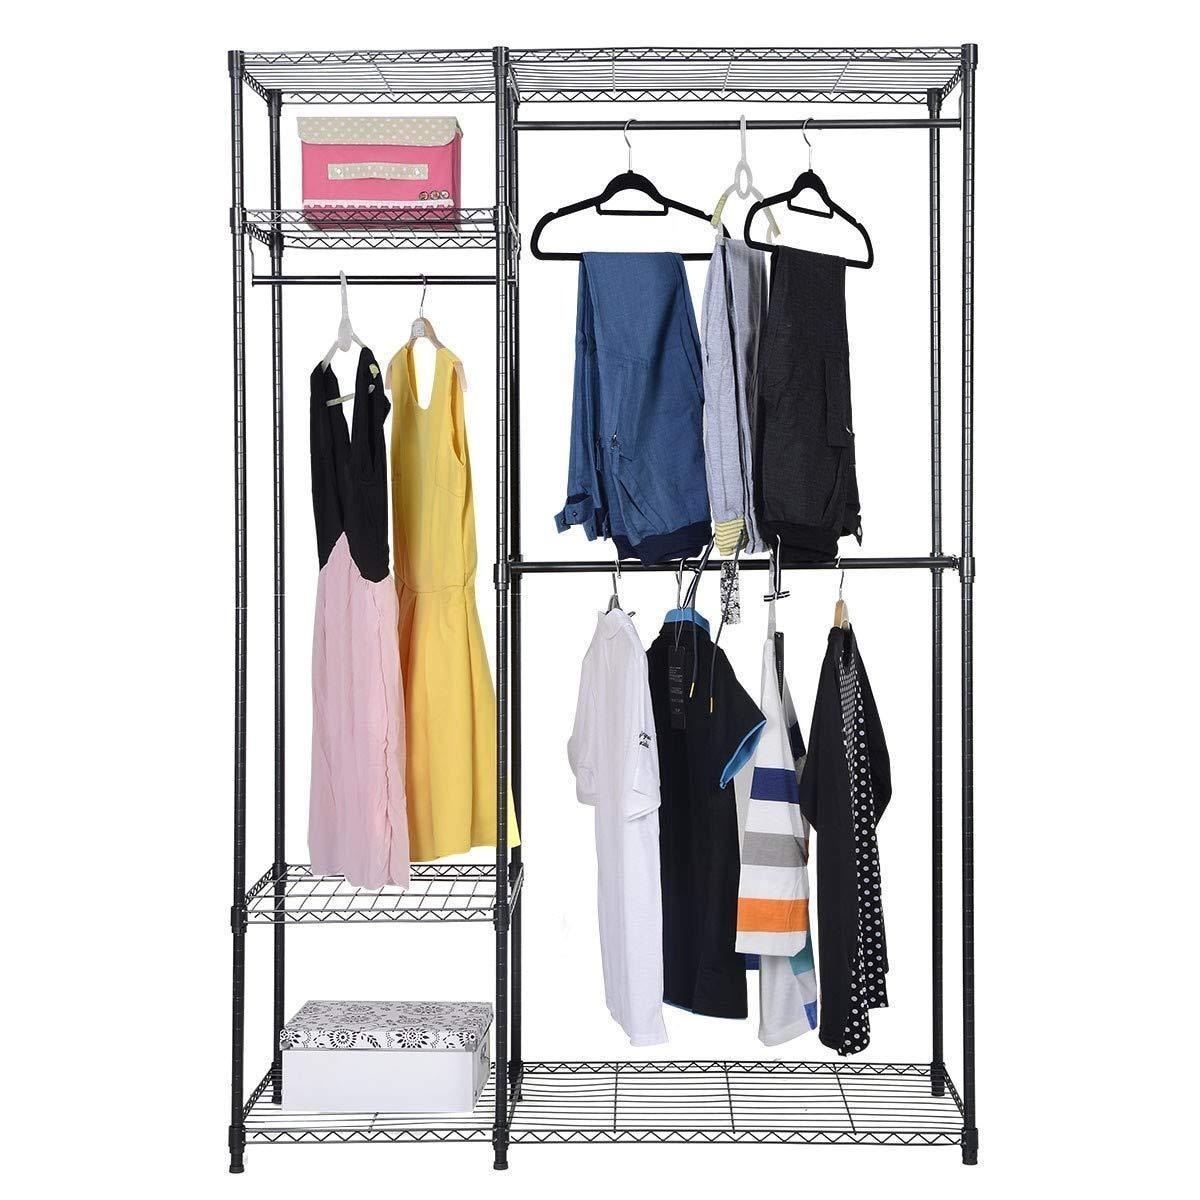 Easy-Store Mini Ironing Board with Hanger Hook, clothing, shirt, wardrobe